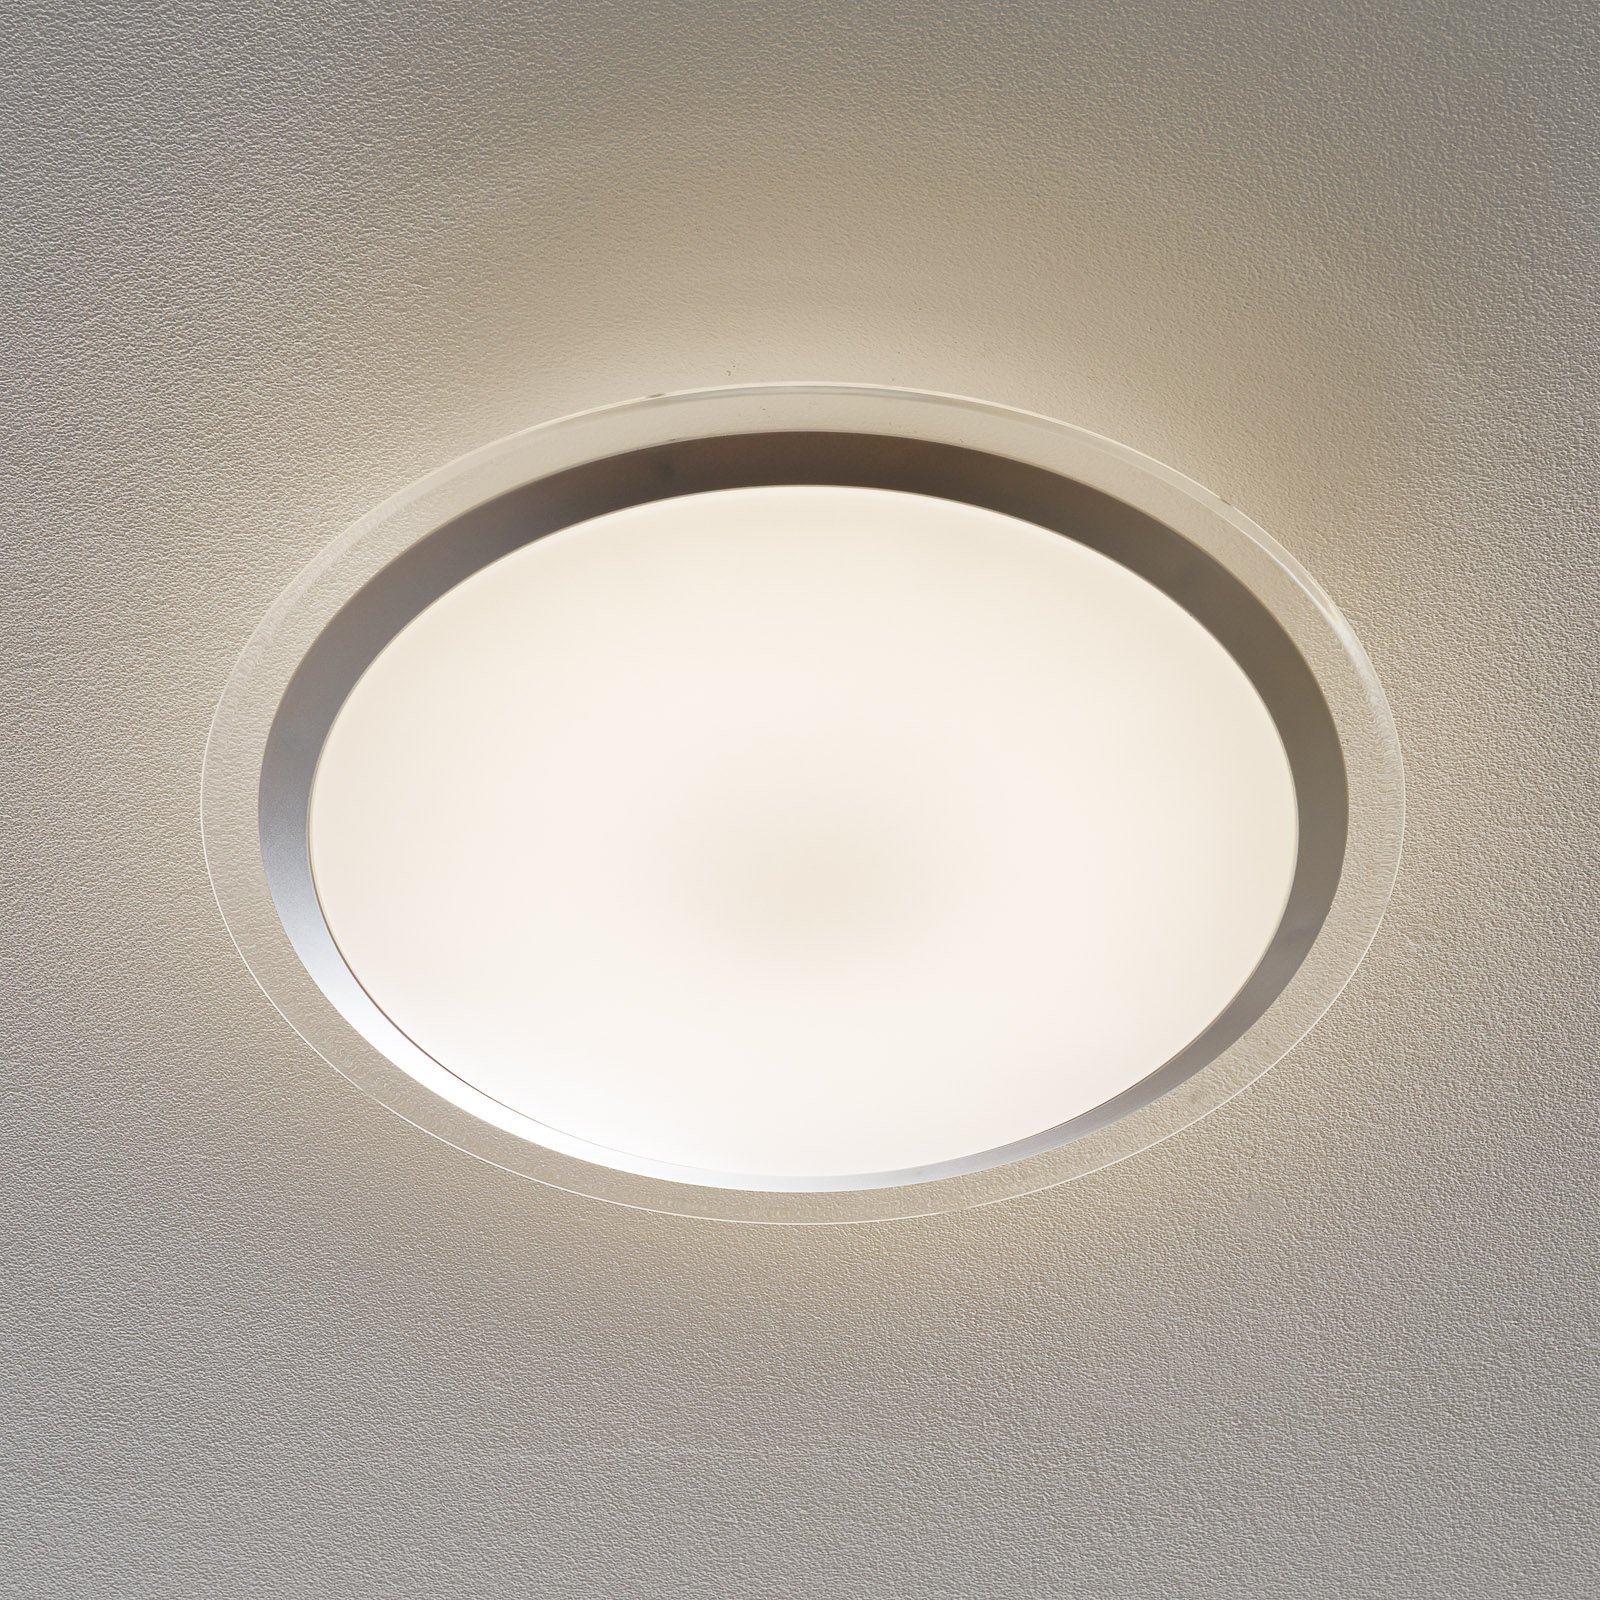 EGLO connect Competa-C LED ceiling light